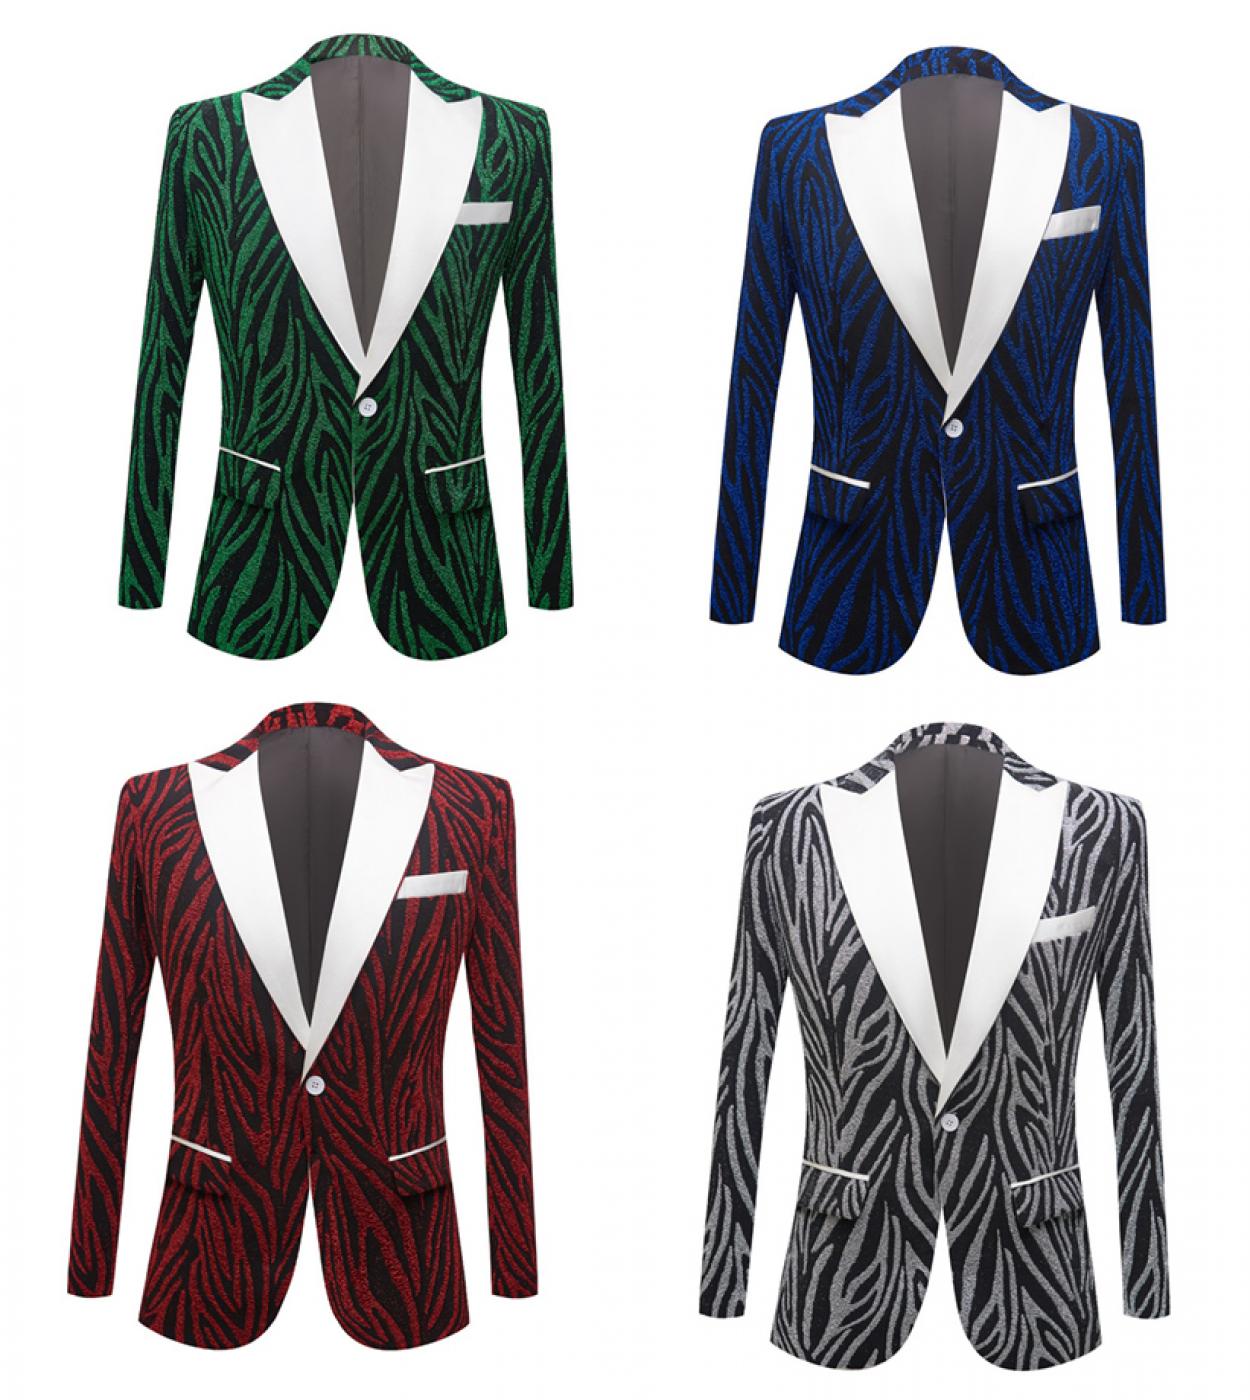 Plyesxale Us Size Fashion Striped Blazers For Men Stylish Men Singer Stage Blazer Suit Jacket Blue Green Terno Masculino